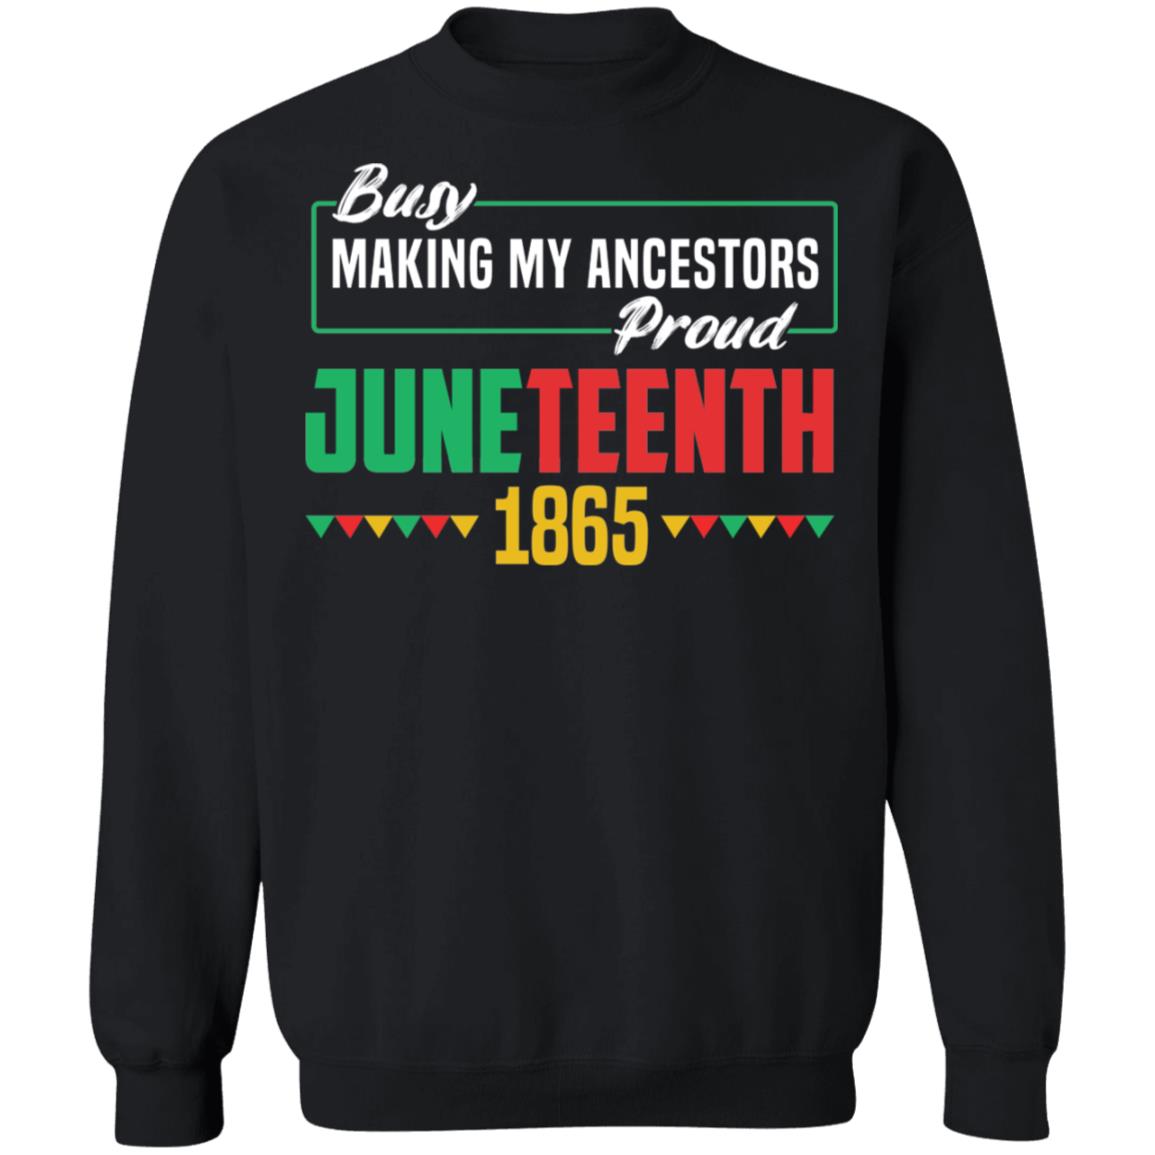 Busy Making My Ancestors Proud - Juneteenth T-shirt Apparel Gearment Crewneck Sweatshirt Black S